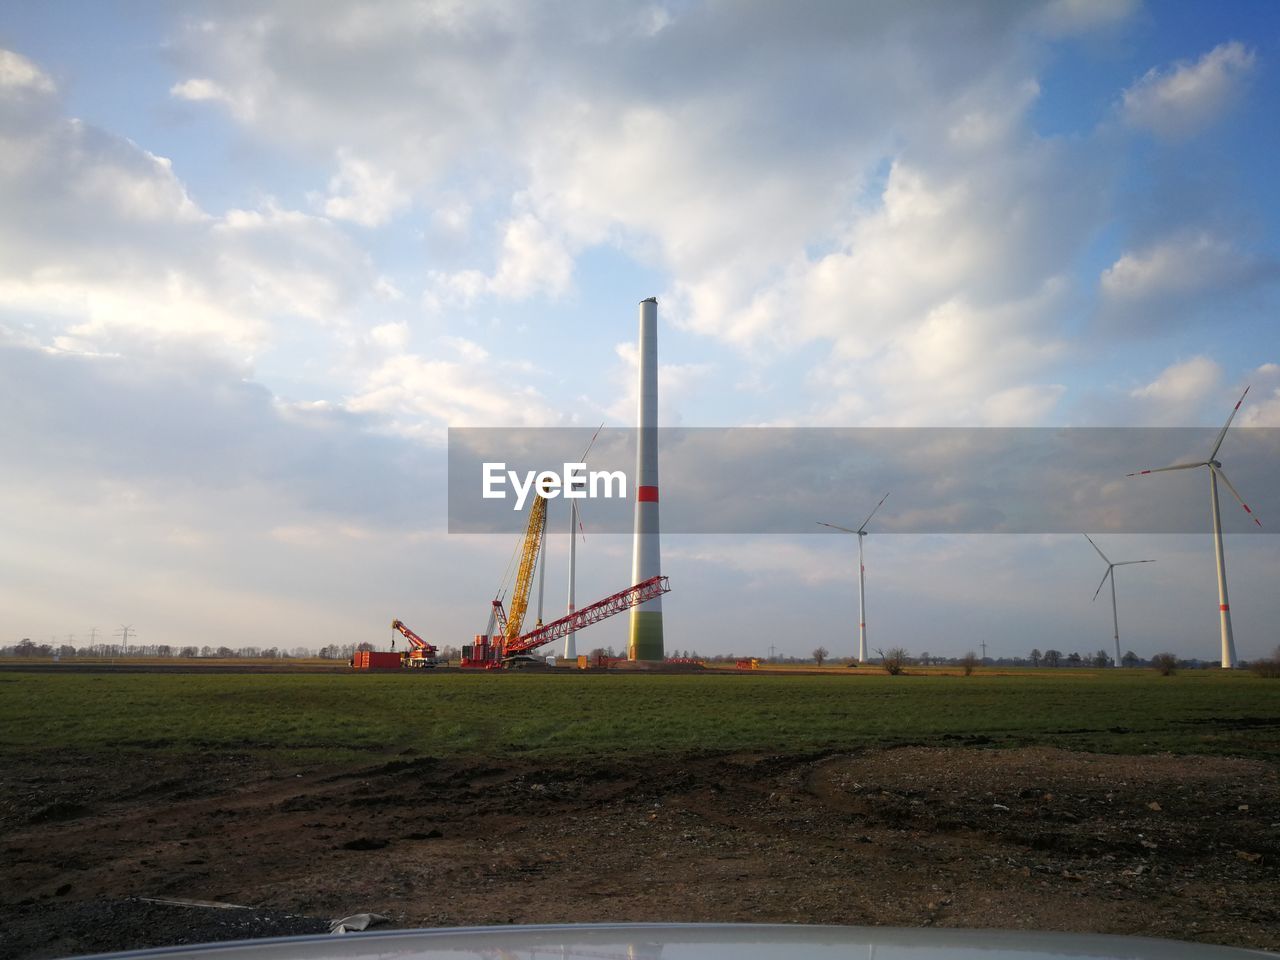 New wind turbine